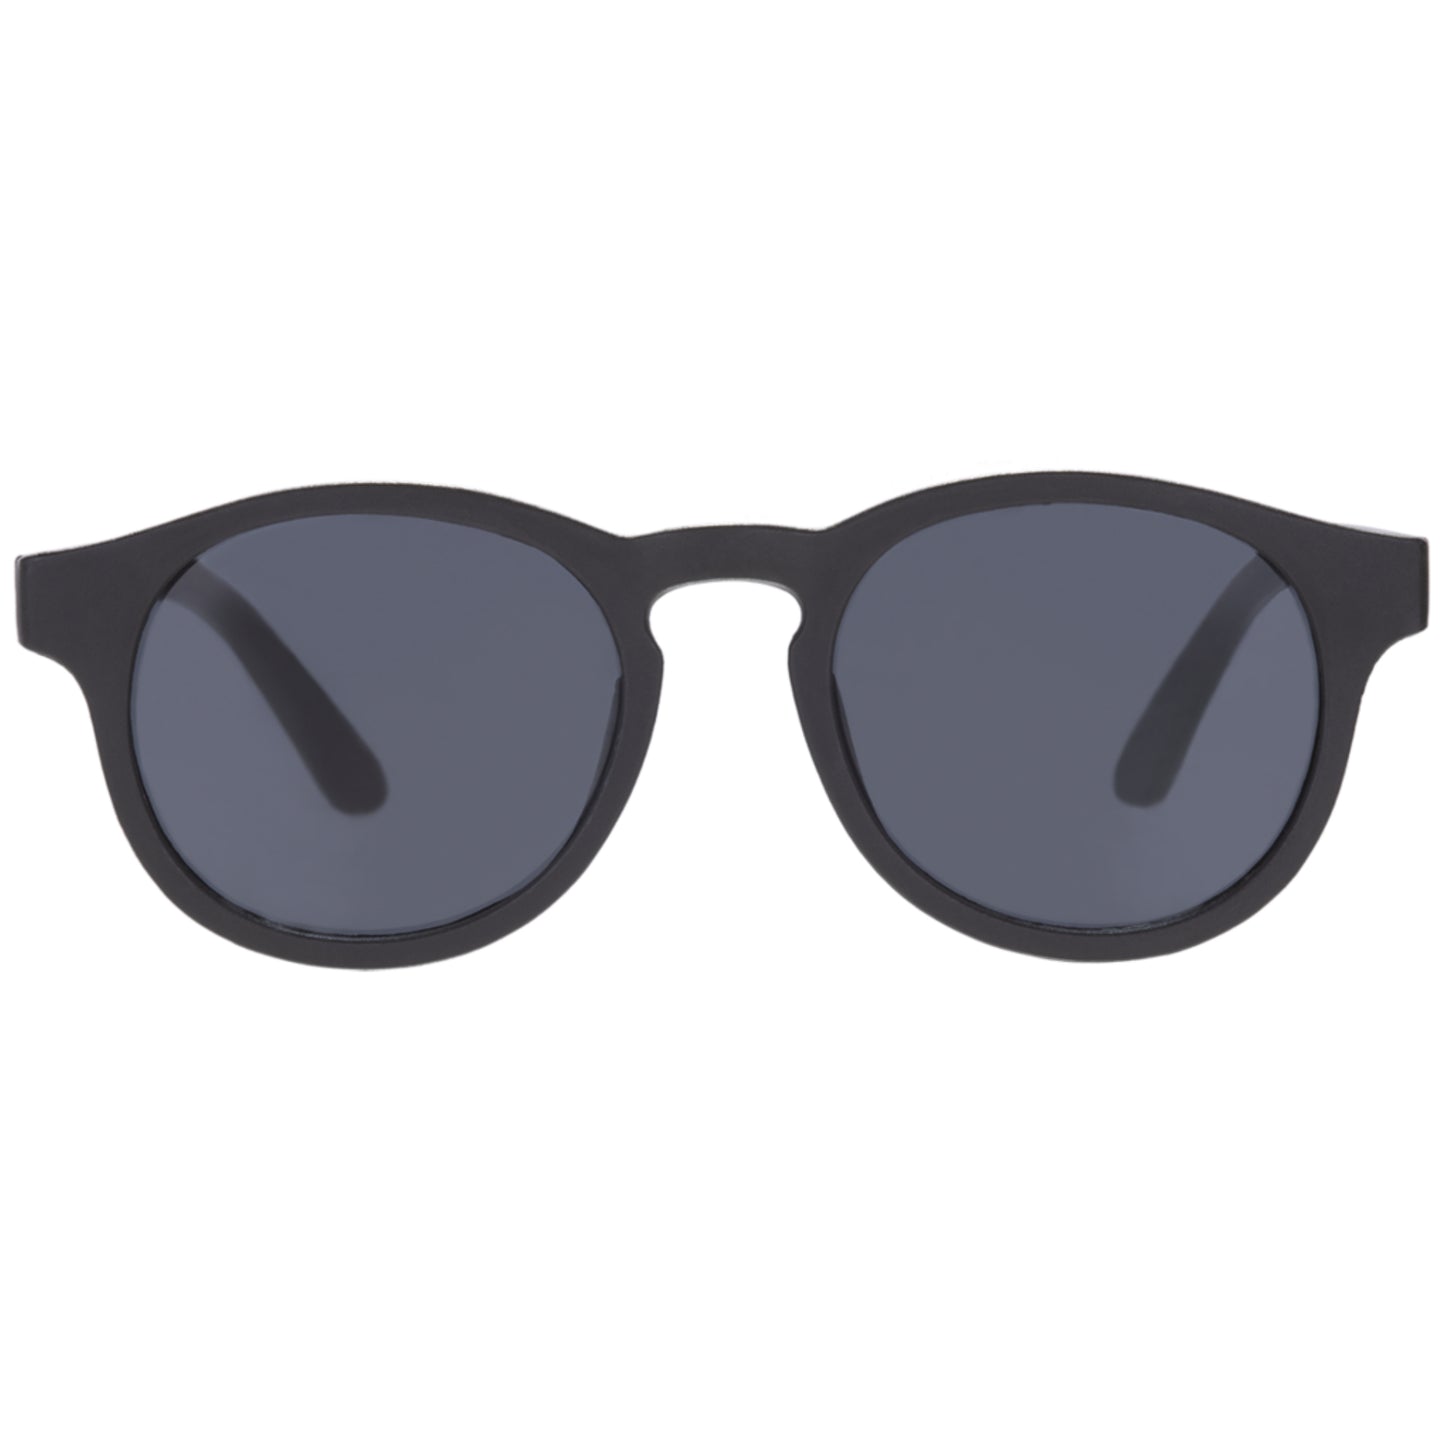 Babiators Sunglasses - Black Ops Black Keyhole